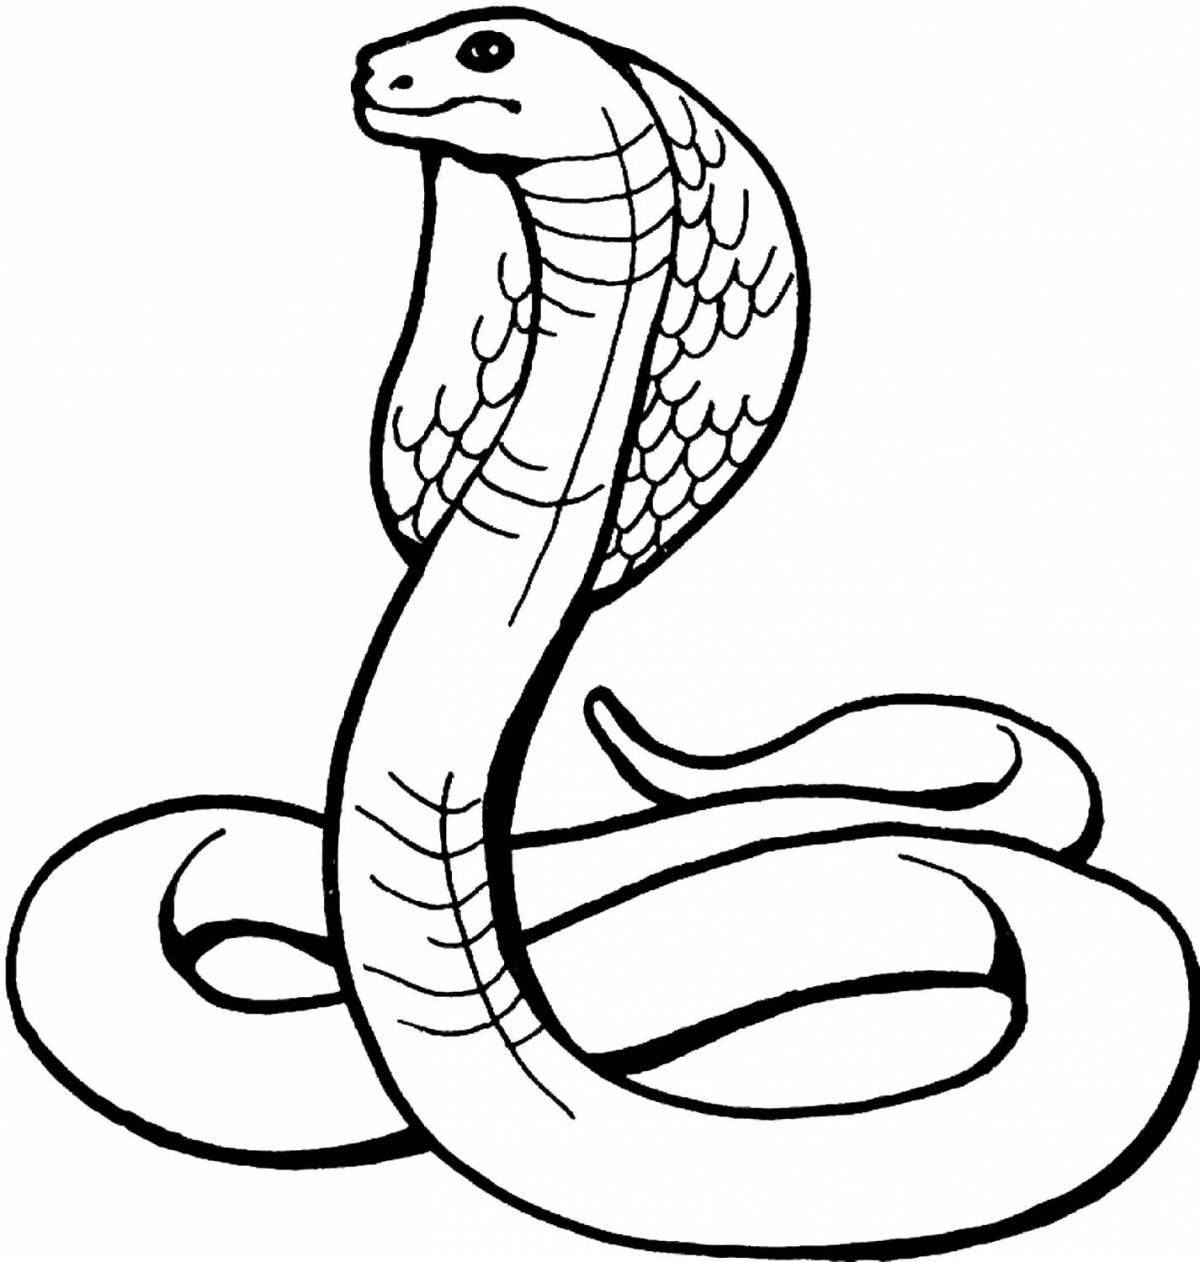 Spooky king cobra coloring book